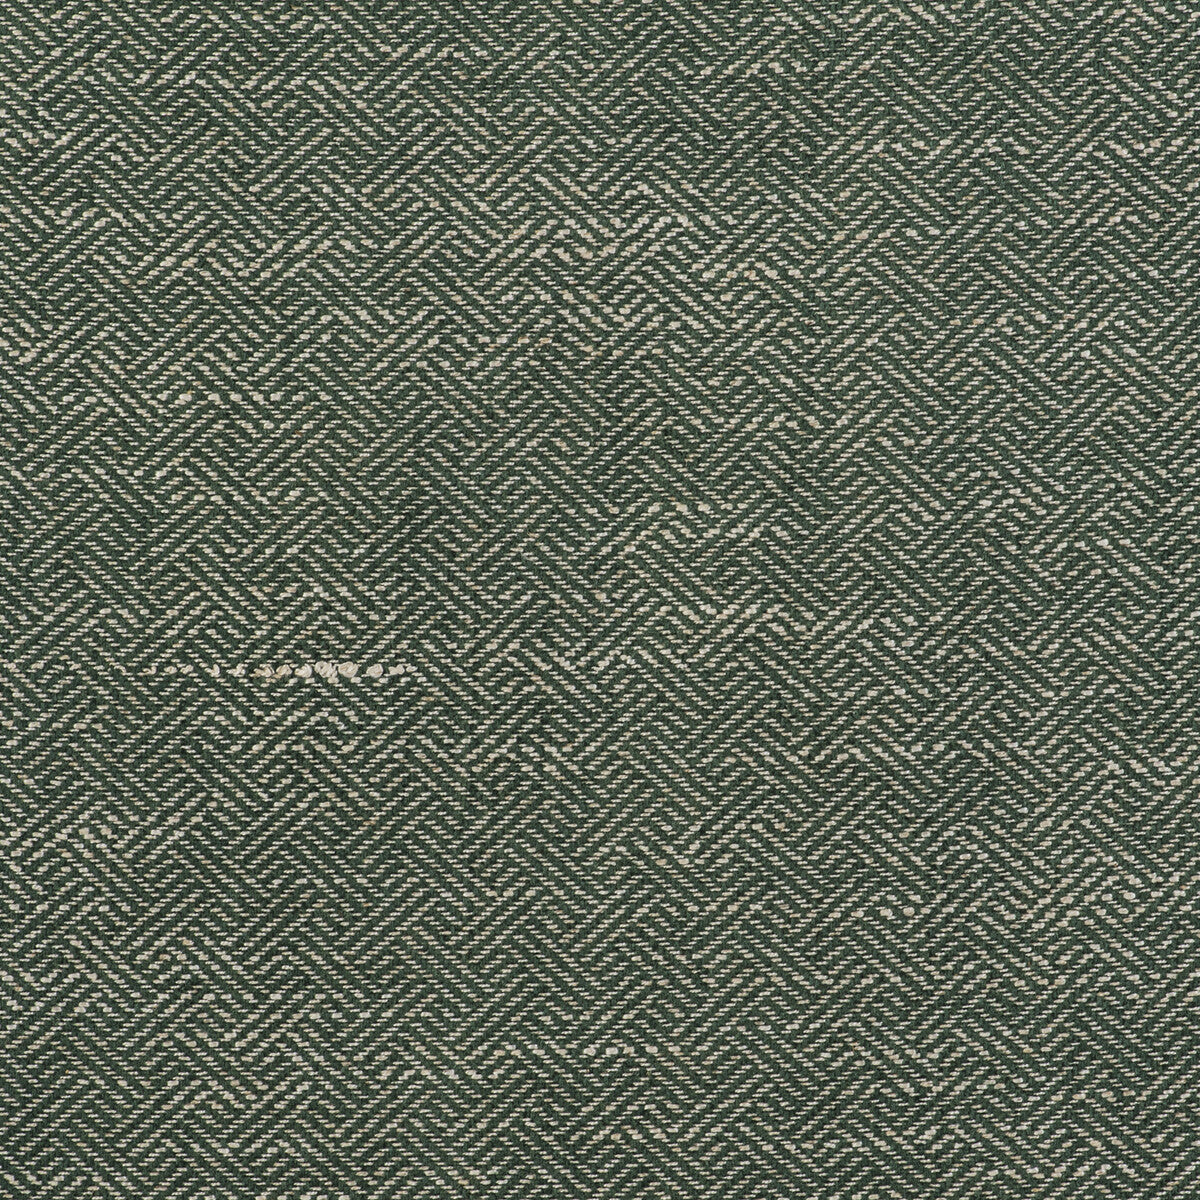 Enea fabric in verde color - pattern GDT5518.007.0 - by Gaston y Daniela in the Gaston Libreria collection